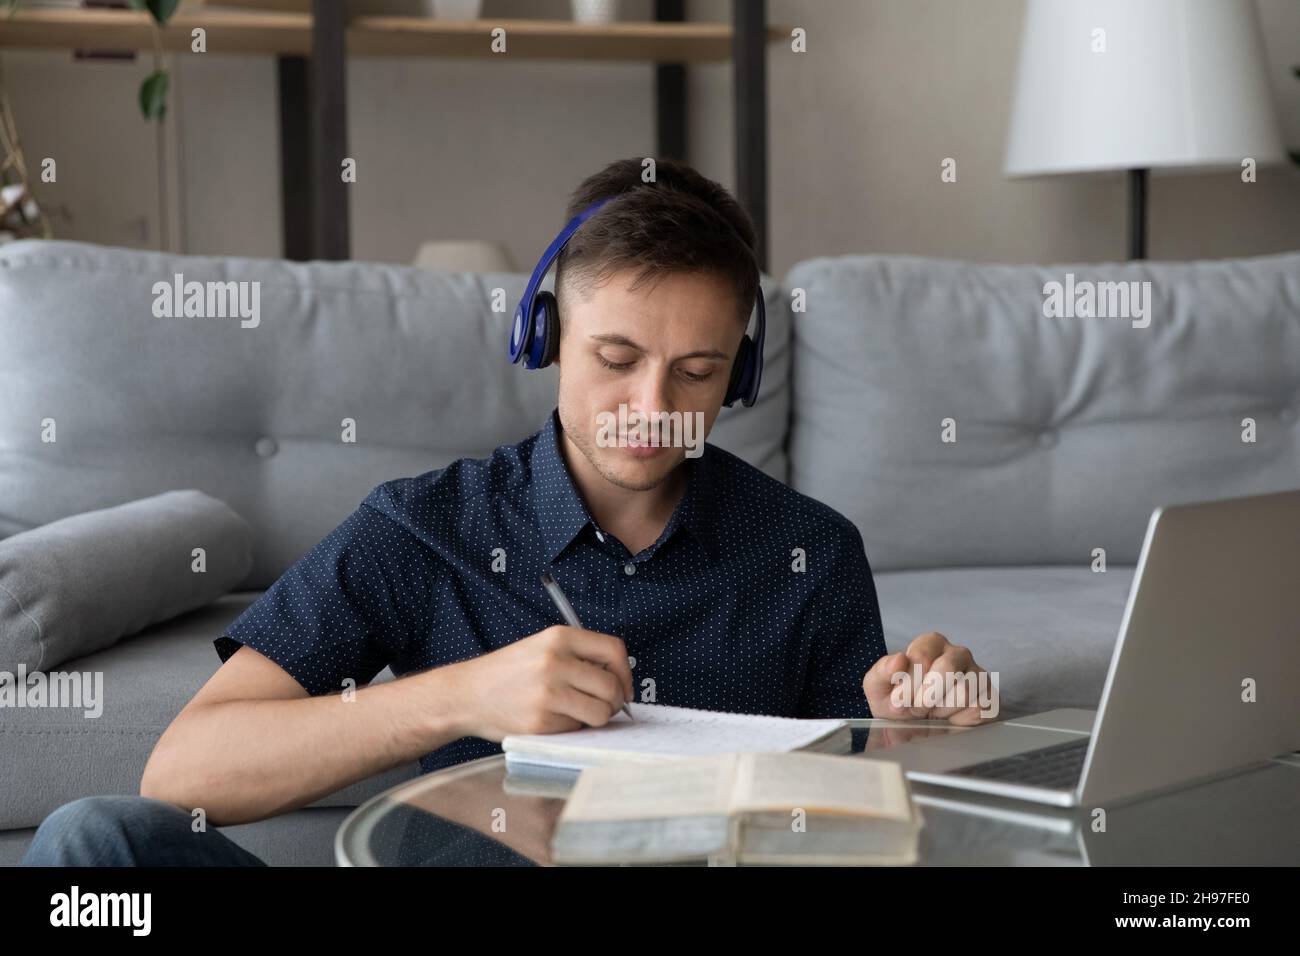 Focused young adult student guy wearing wireless earphones Stock Photo